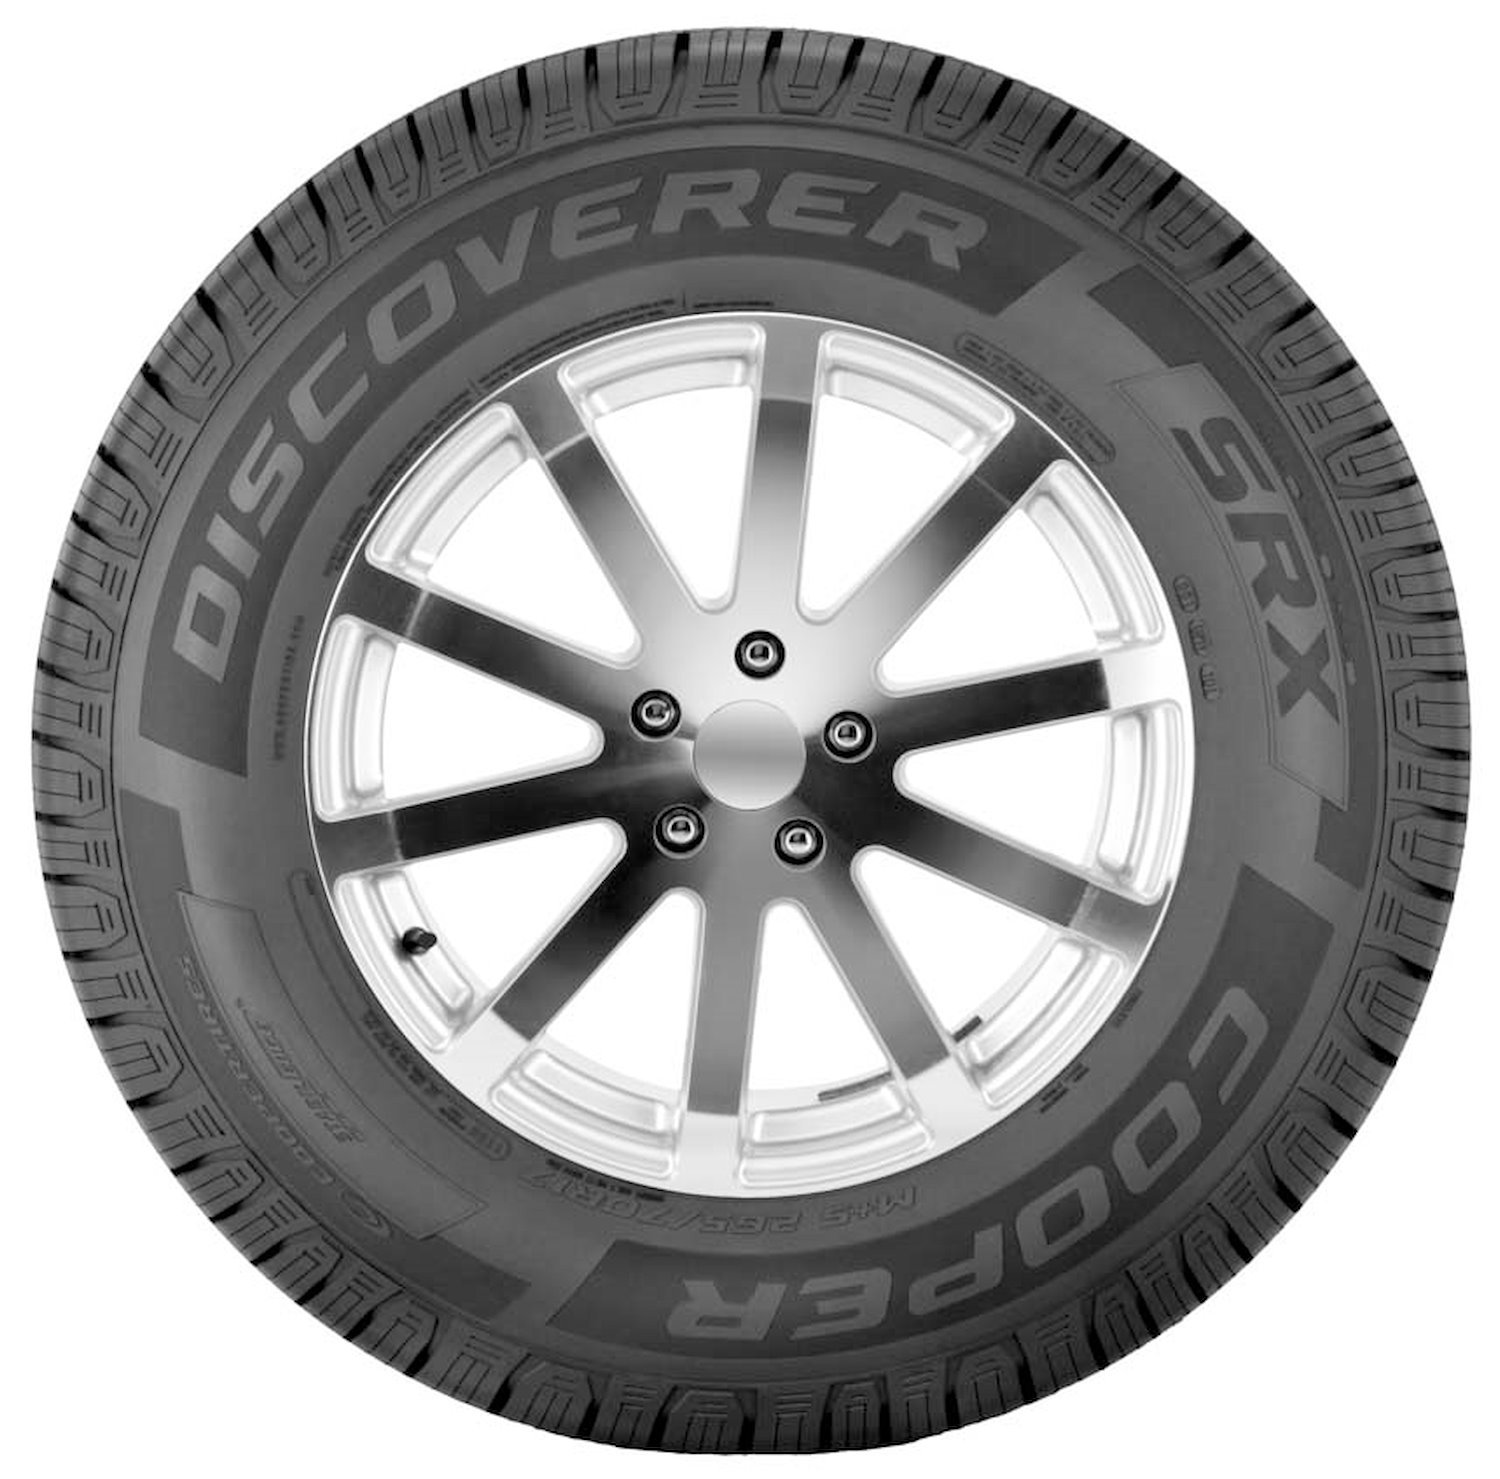 Discoverer SRX Commuter/Touring Tire, 255/60R19